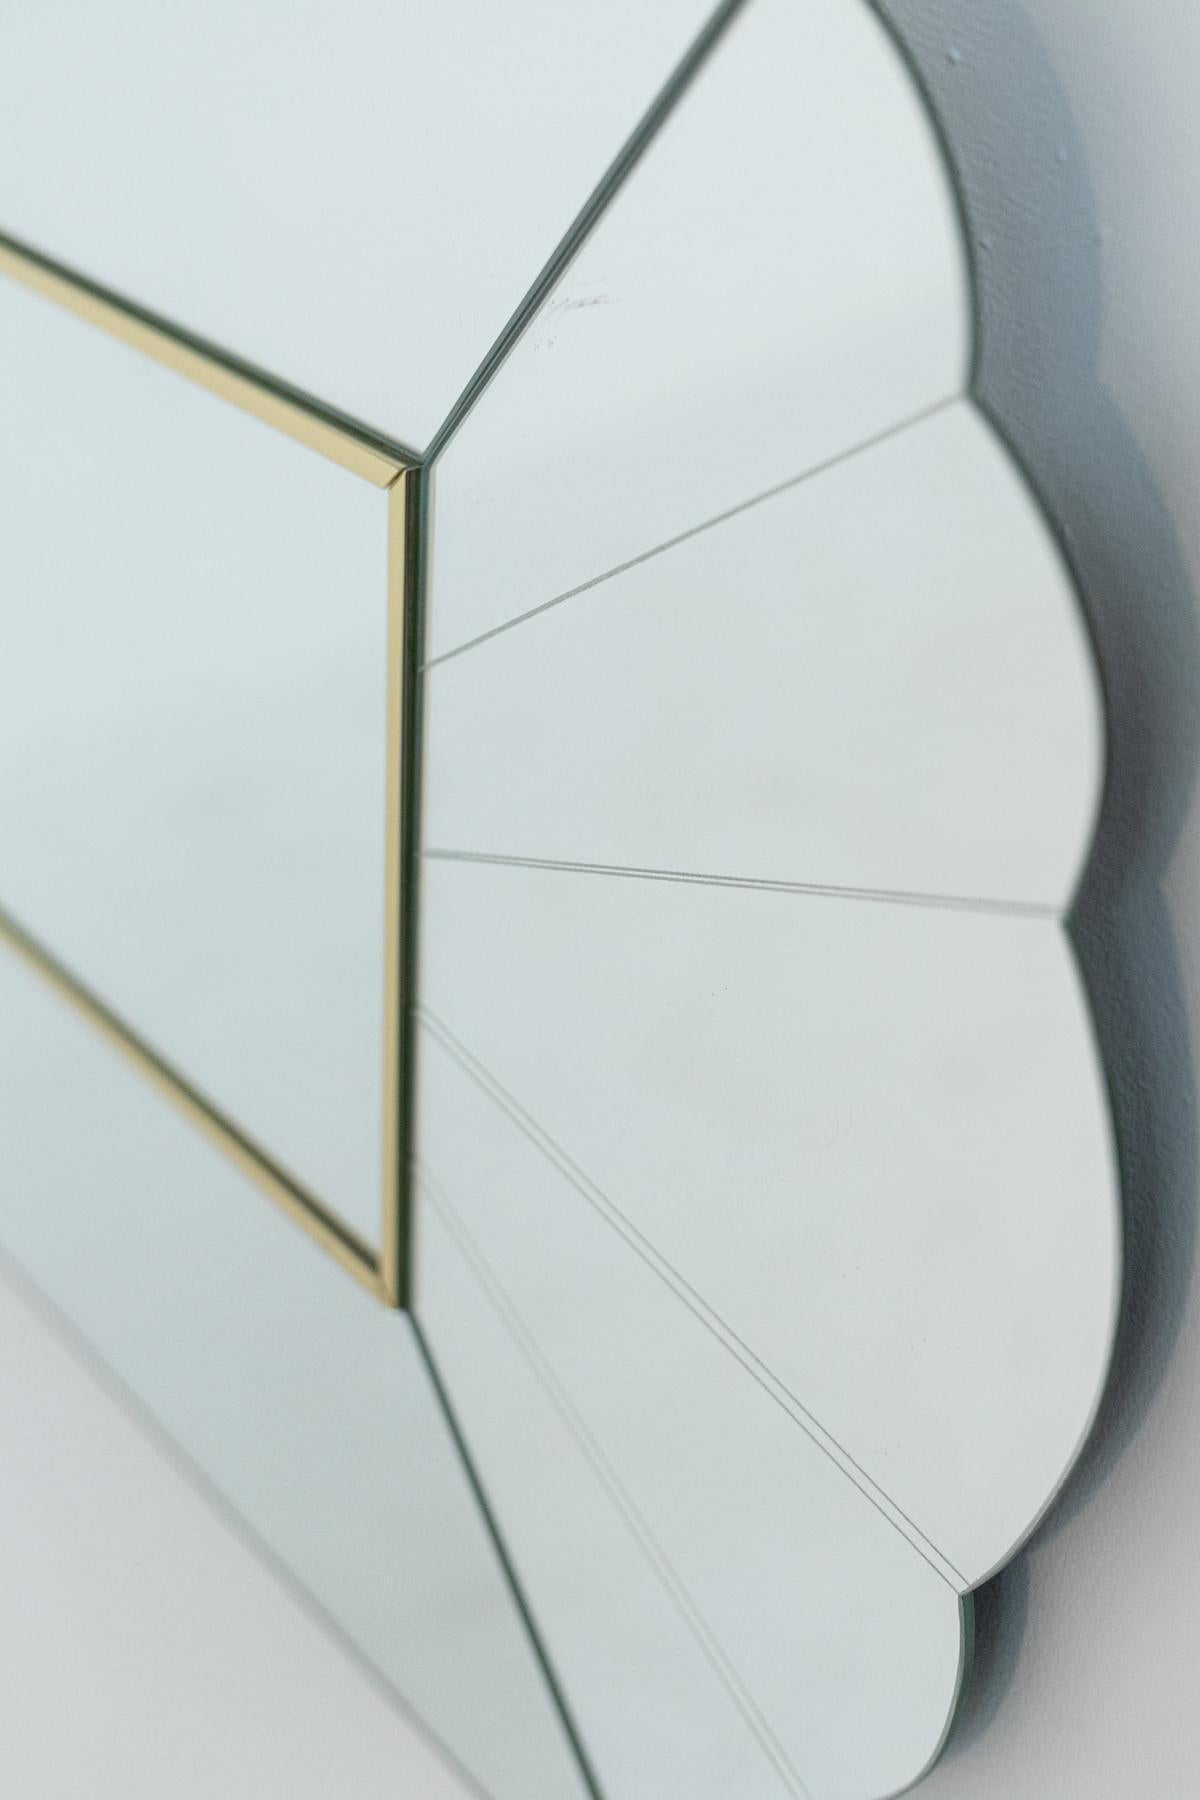 Mid-Century Modern Lovely Wall Mirror by Alain Delon for Maison Jansen